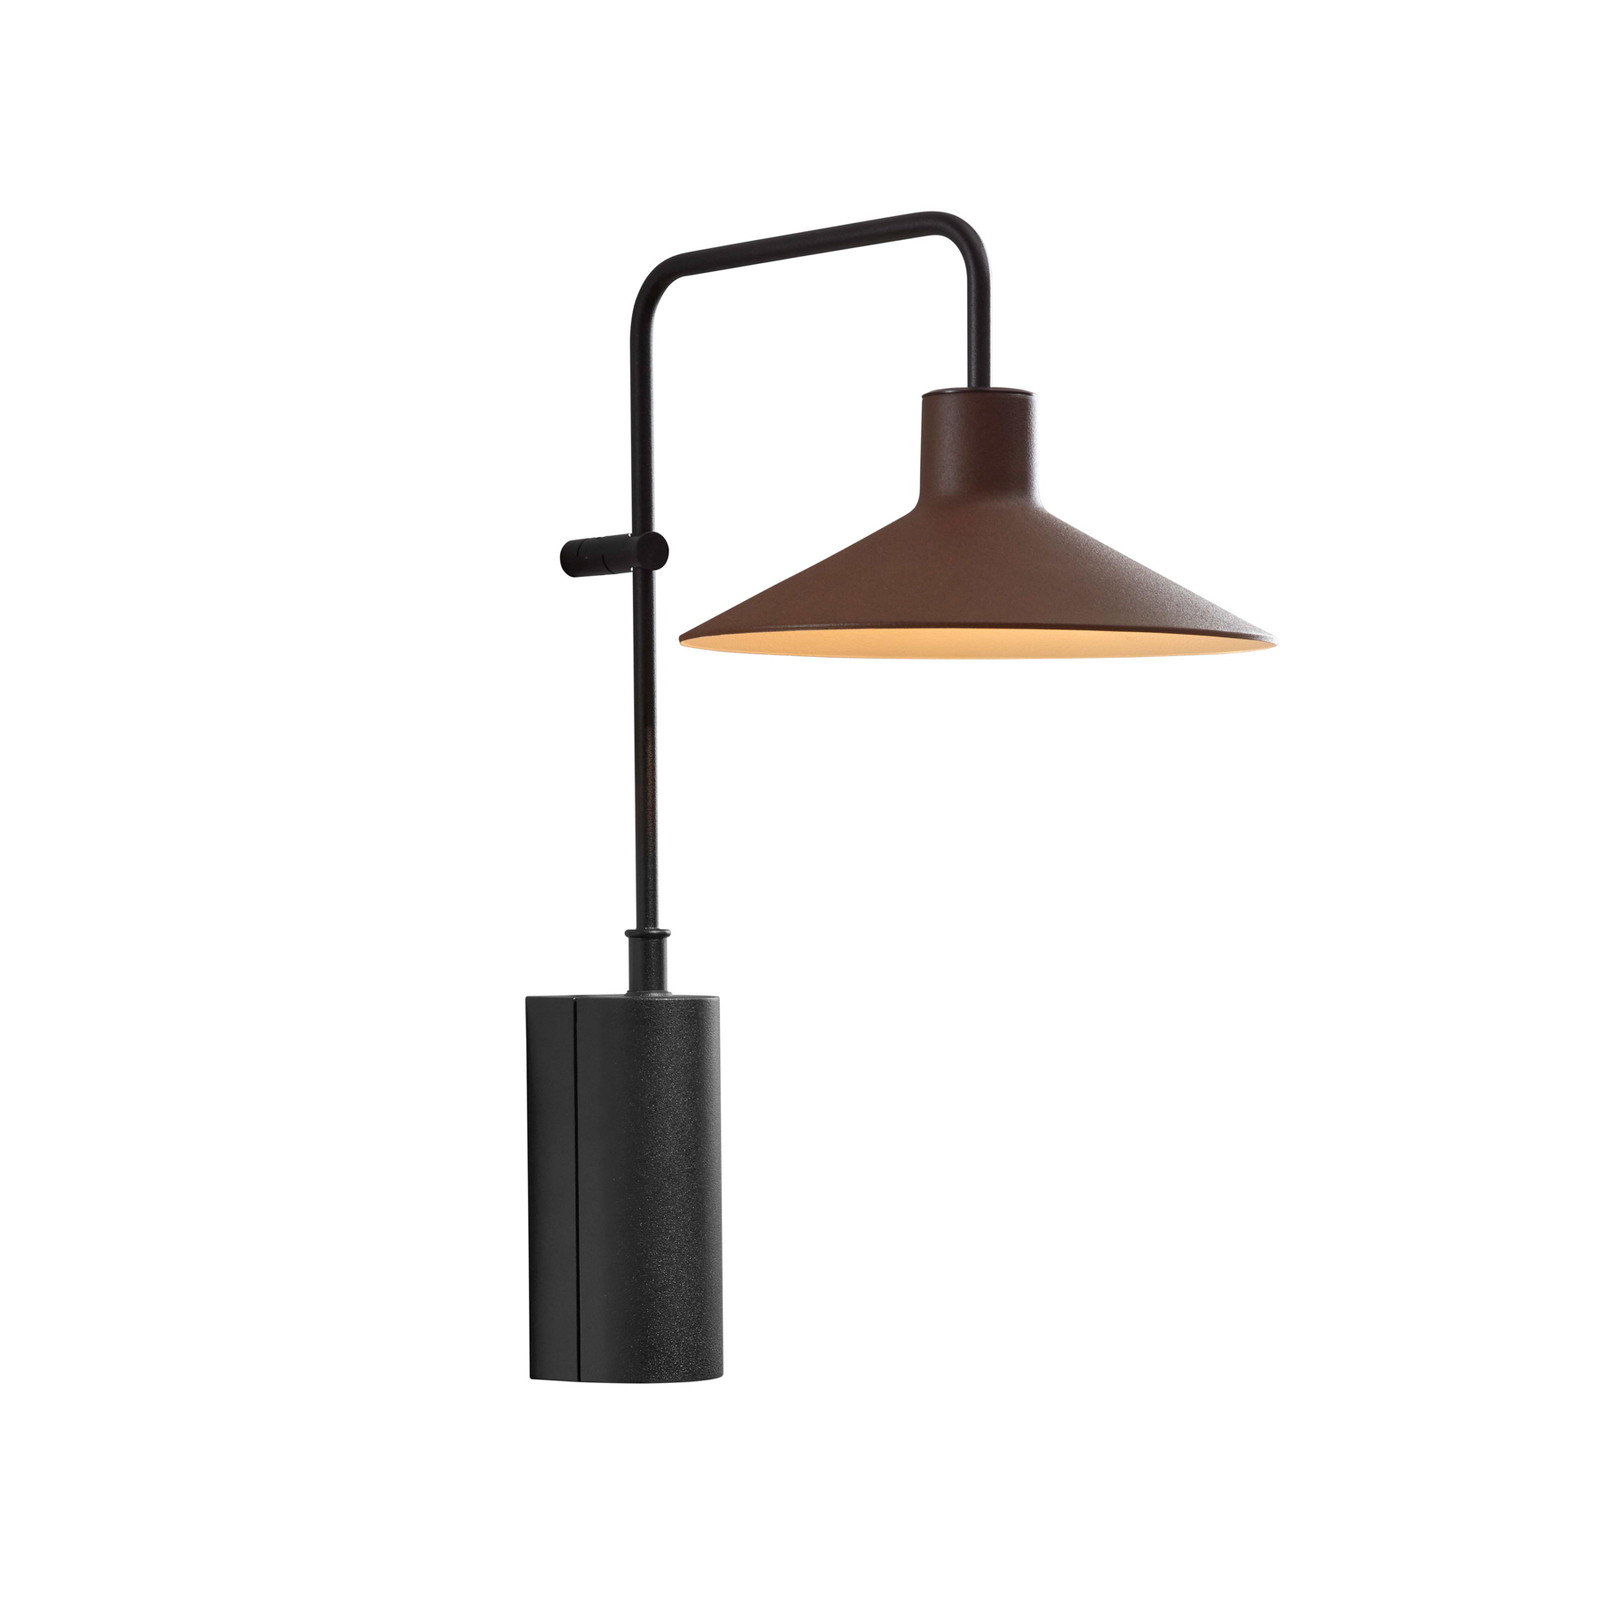 Bover Platet A01 LED-Außenwandlampe Schirm braun